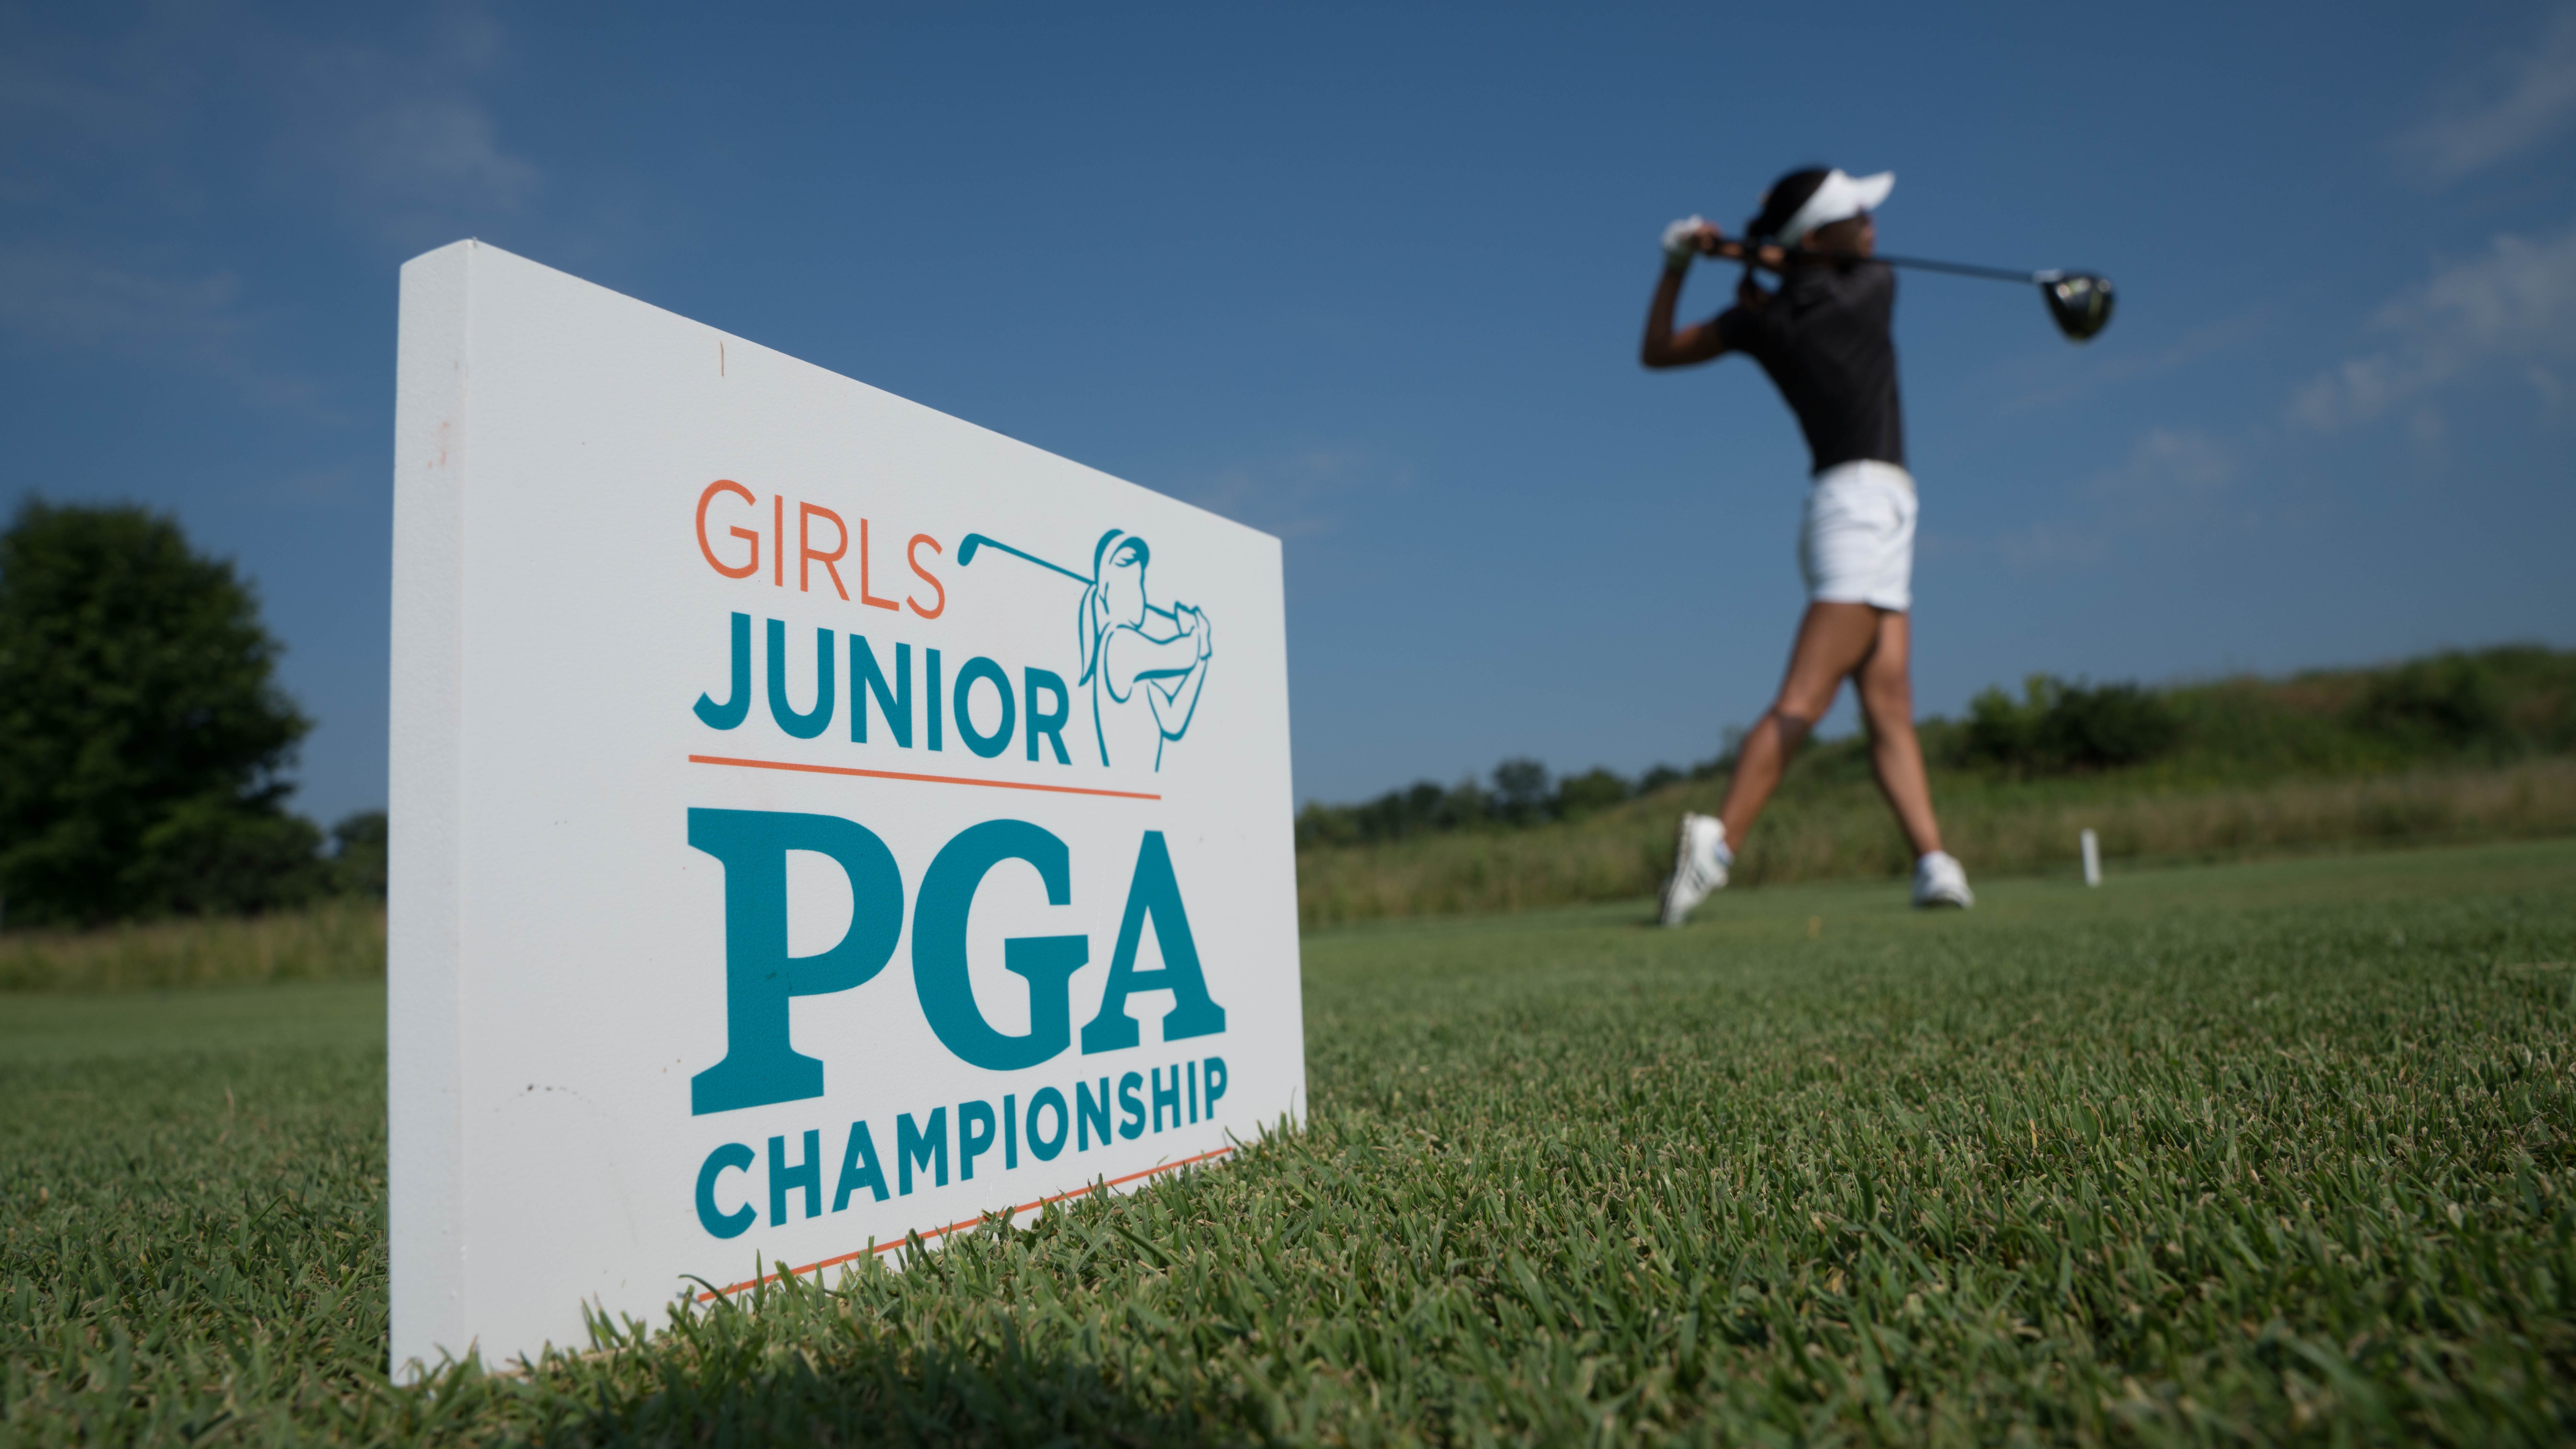 2018 Girls Junior PGA Championship Round 3 tee times